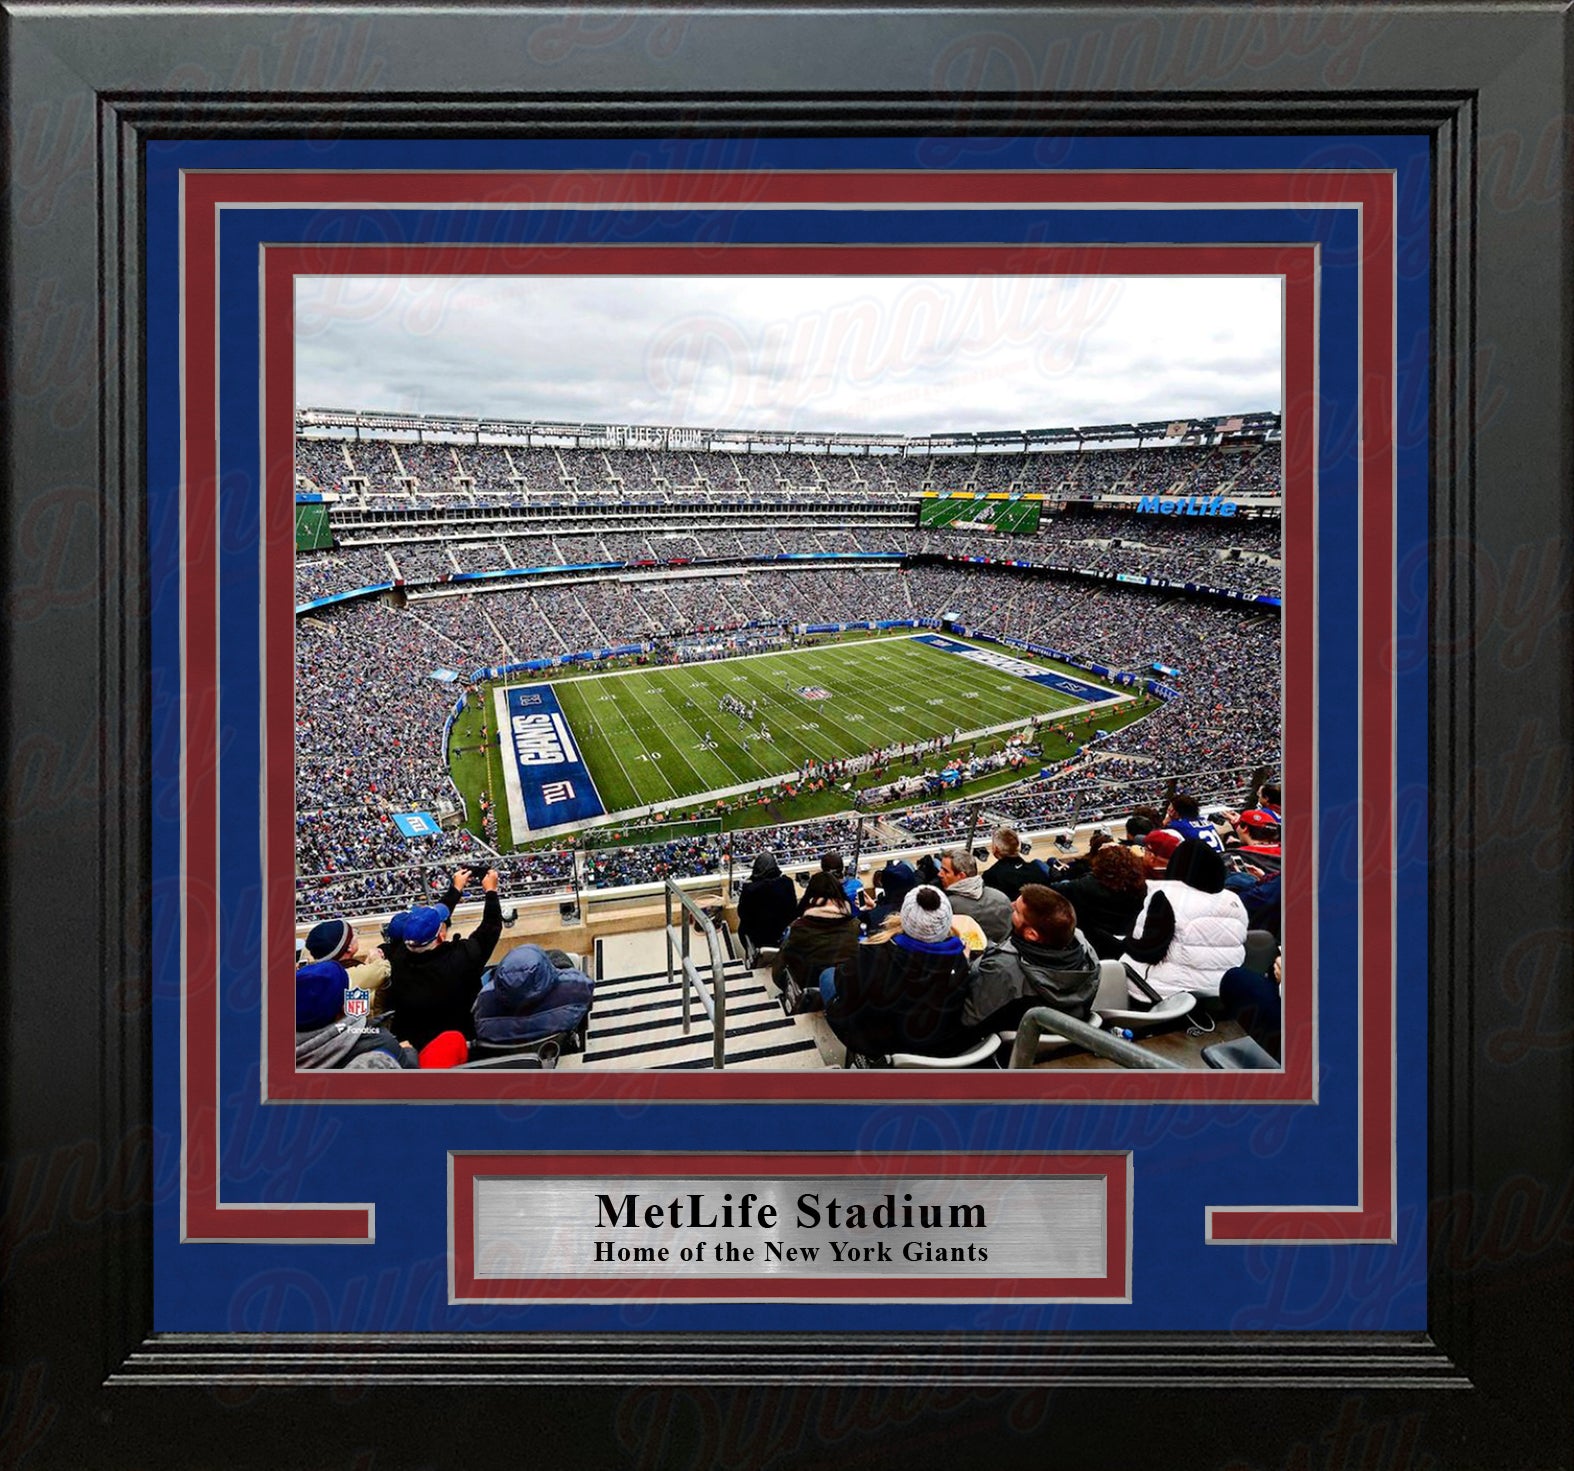 New York Giants MetLife Stadium Aerial View 8' x 10' Framed Football Photo